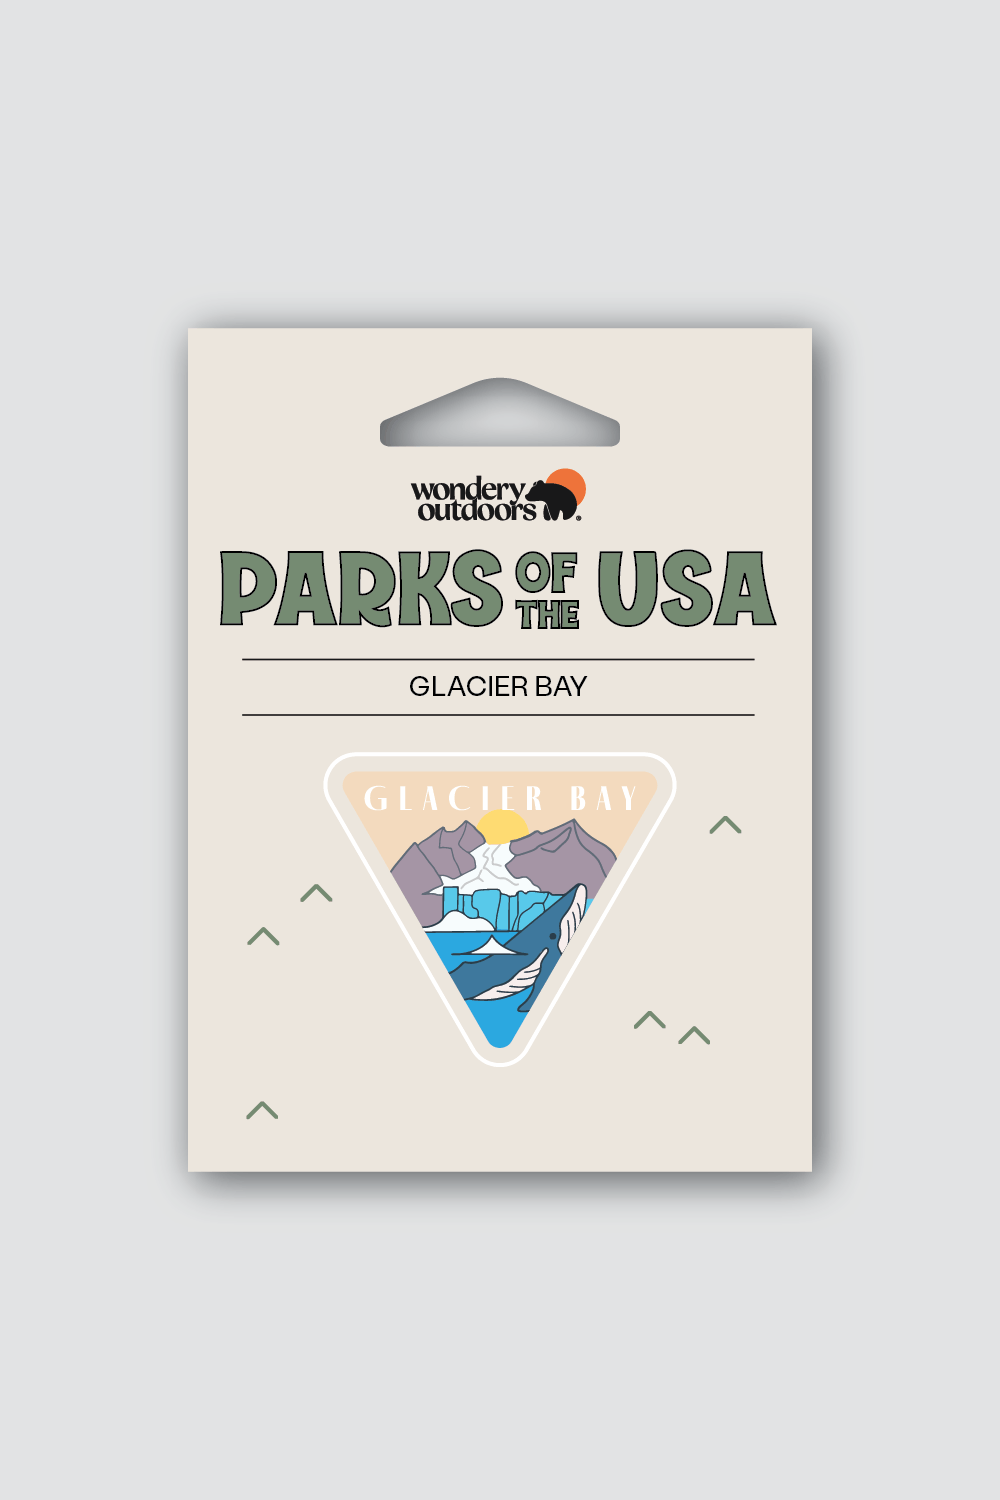 #national park_glacier bay _USA National Parks souvenir sticker gift sets